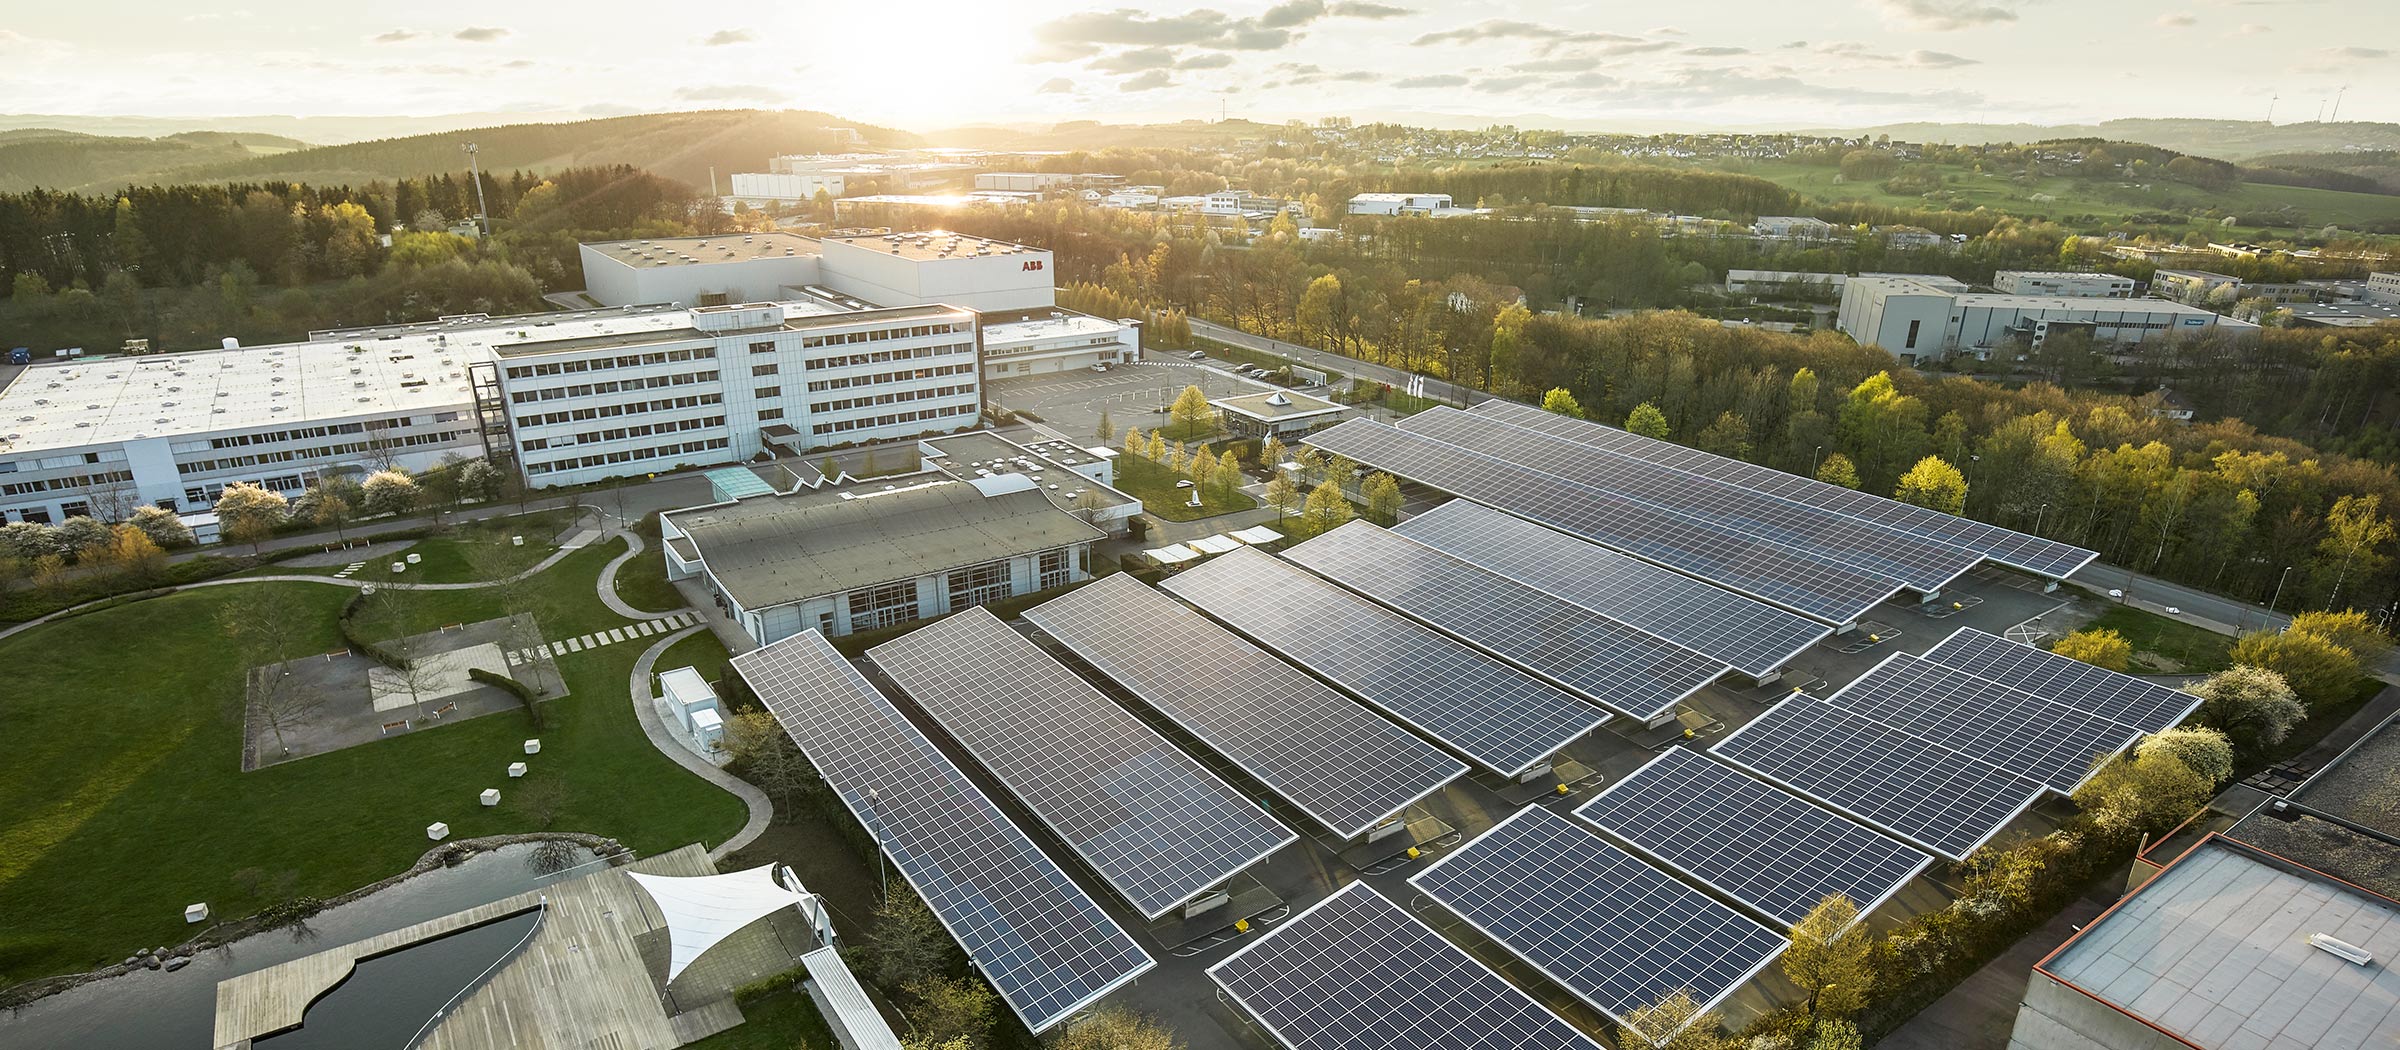 Solar panel park – Ludenscheid, Germany (photo)